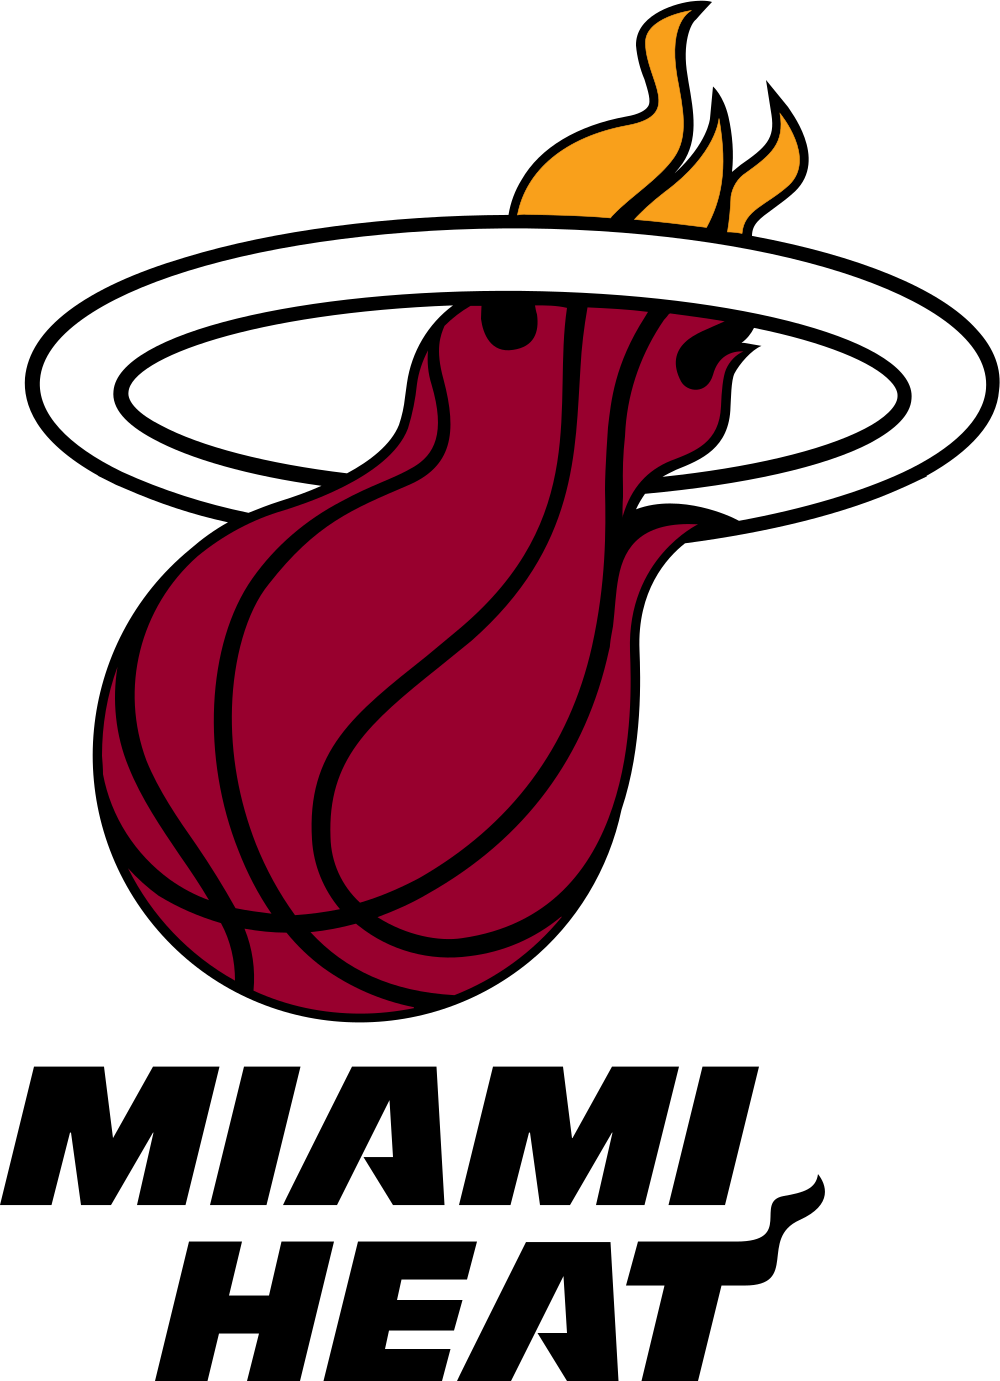 Miami Heat logo png transparent